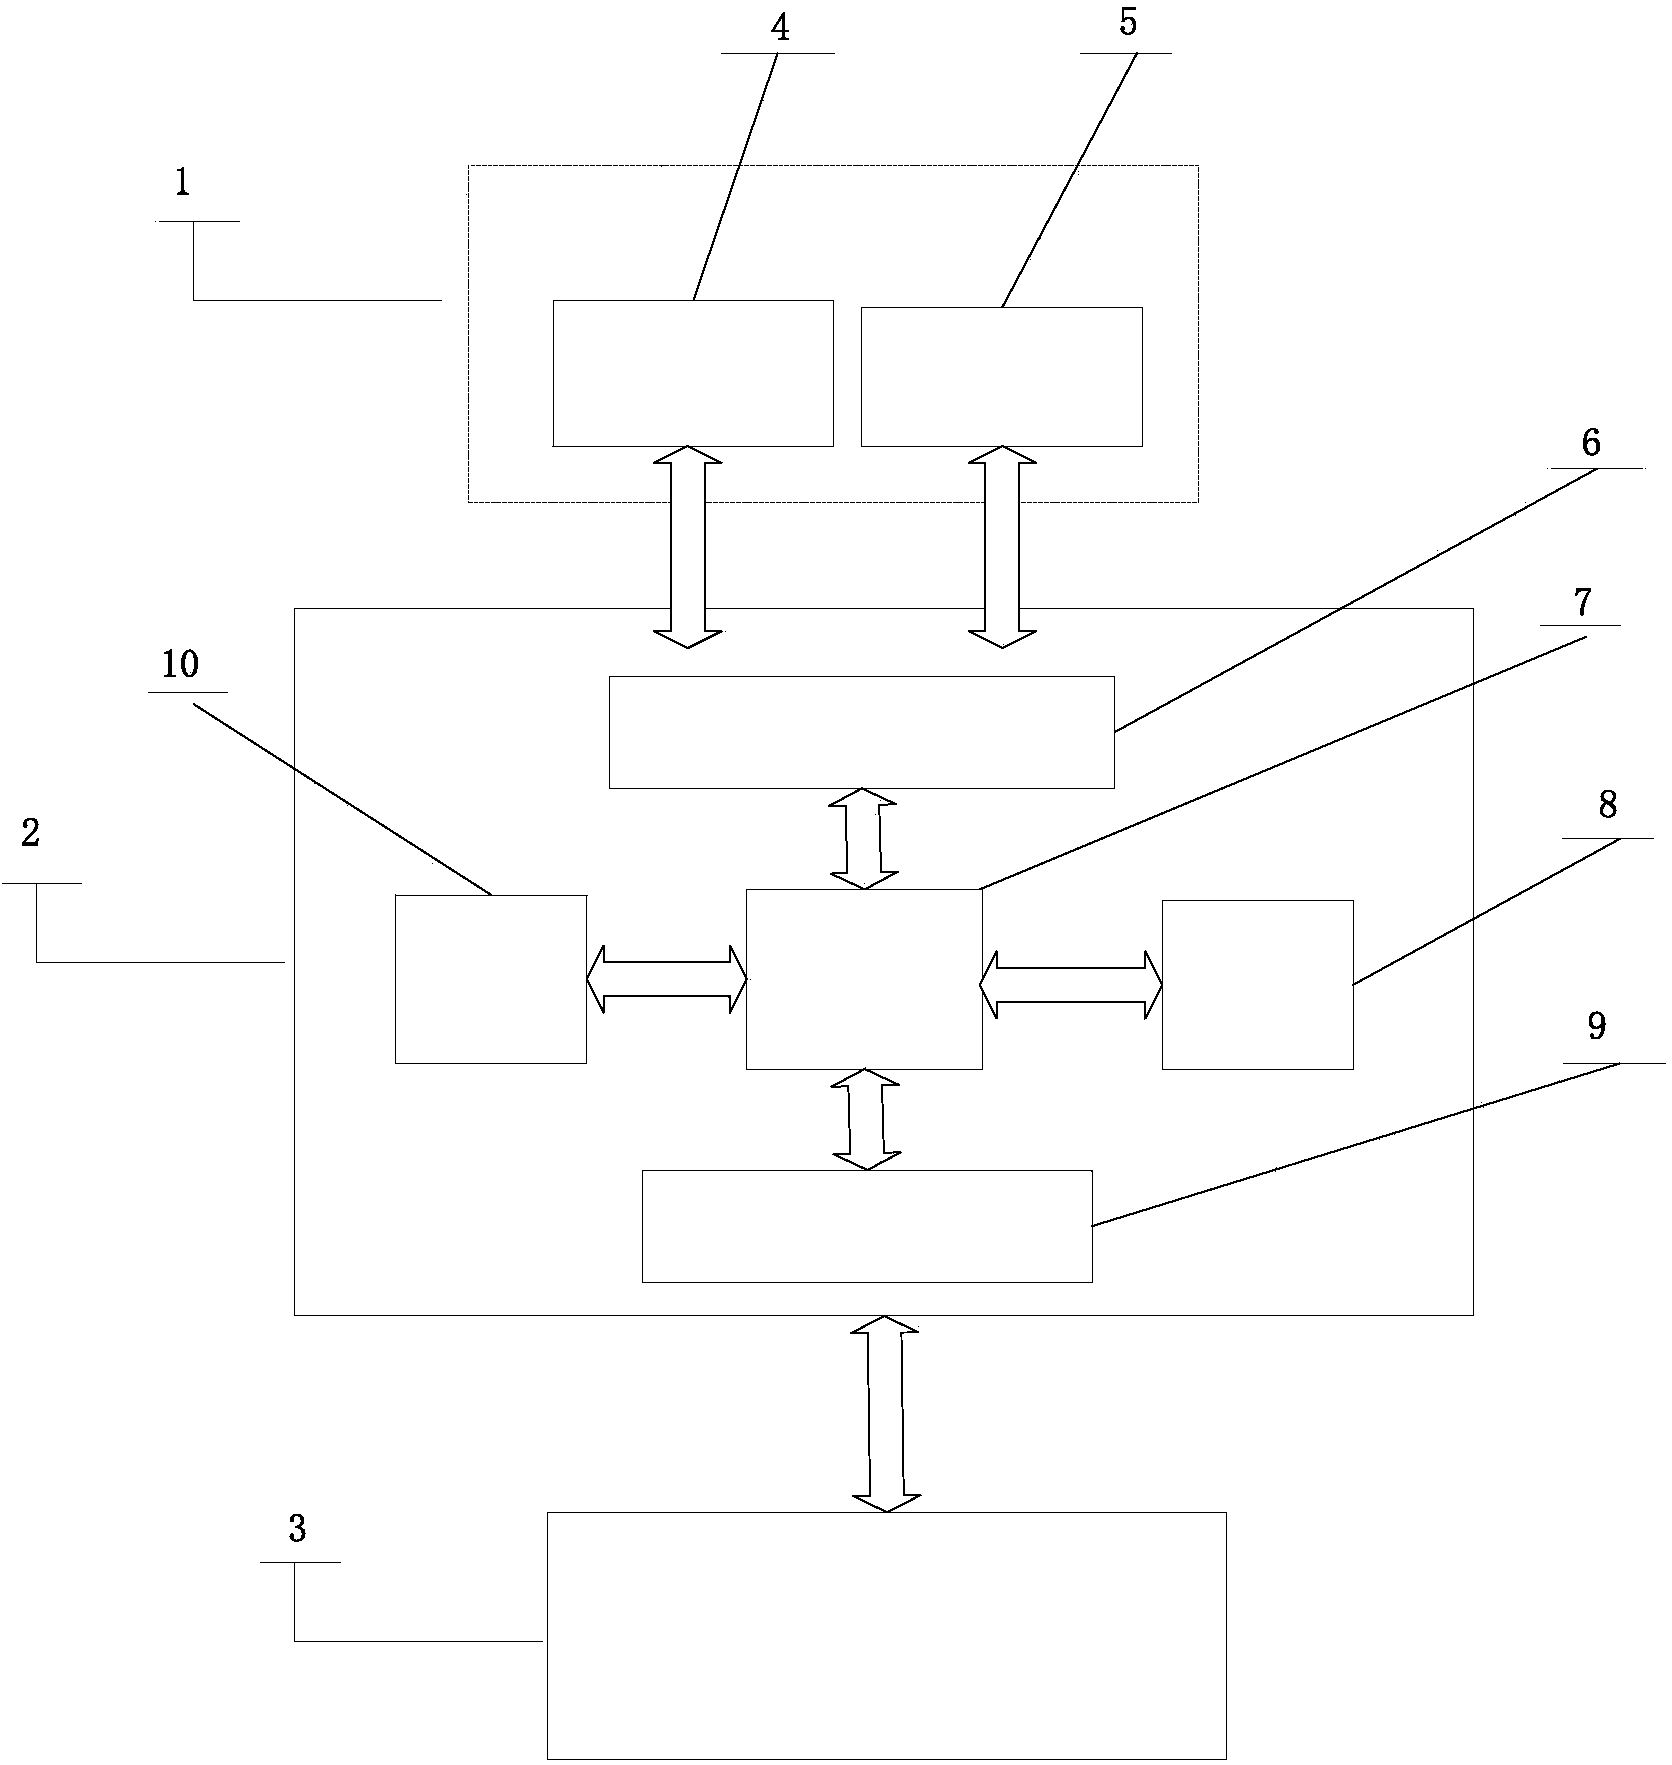 Online detection method of grounding resistor